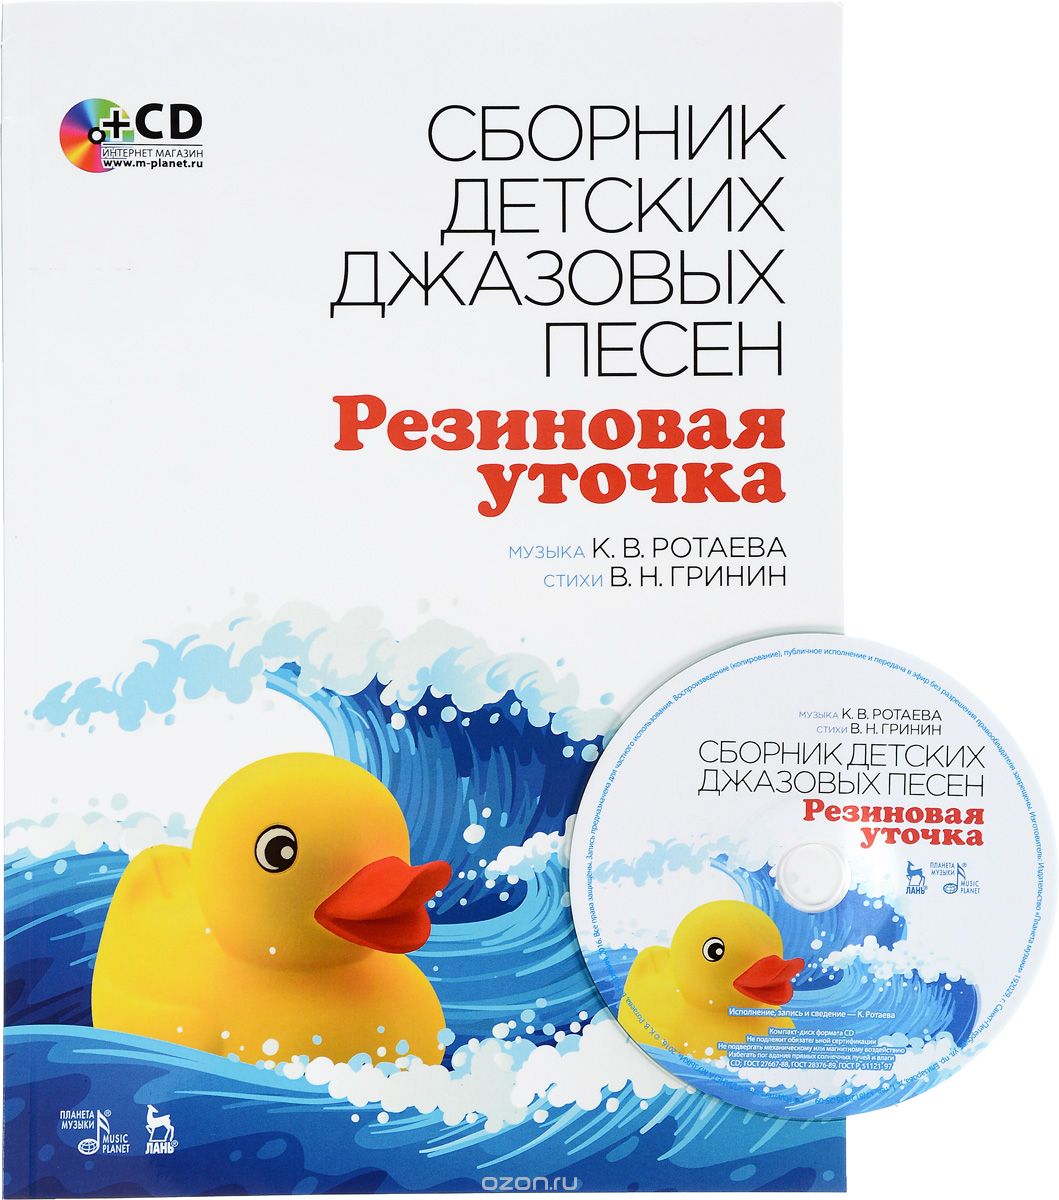 Collection of Children’s Jazz Songs "Rubber Duck": Textbook / Сборник детских джазовых песен "Резиновая уточка" (+ CD)